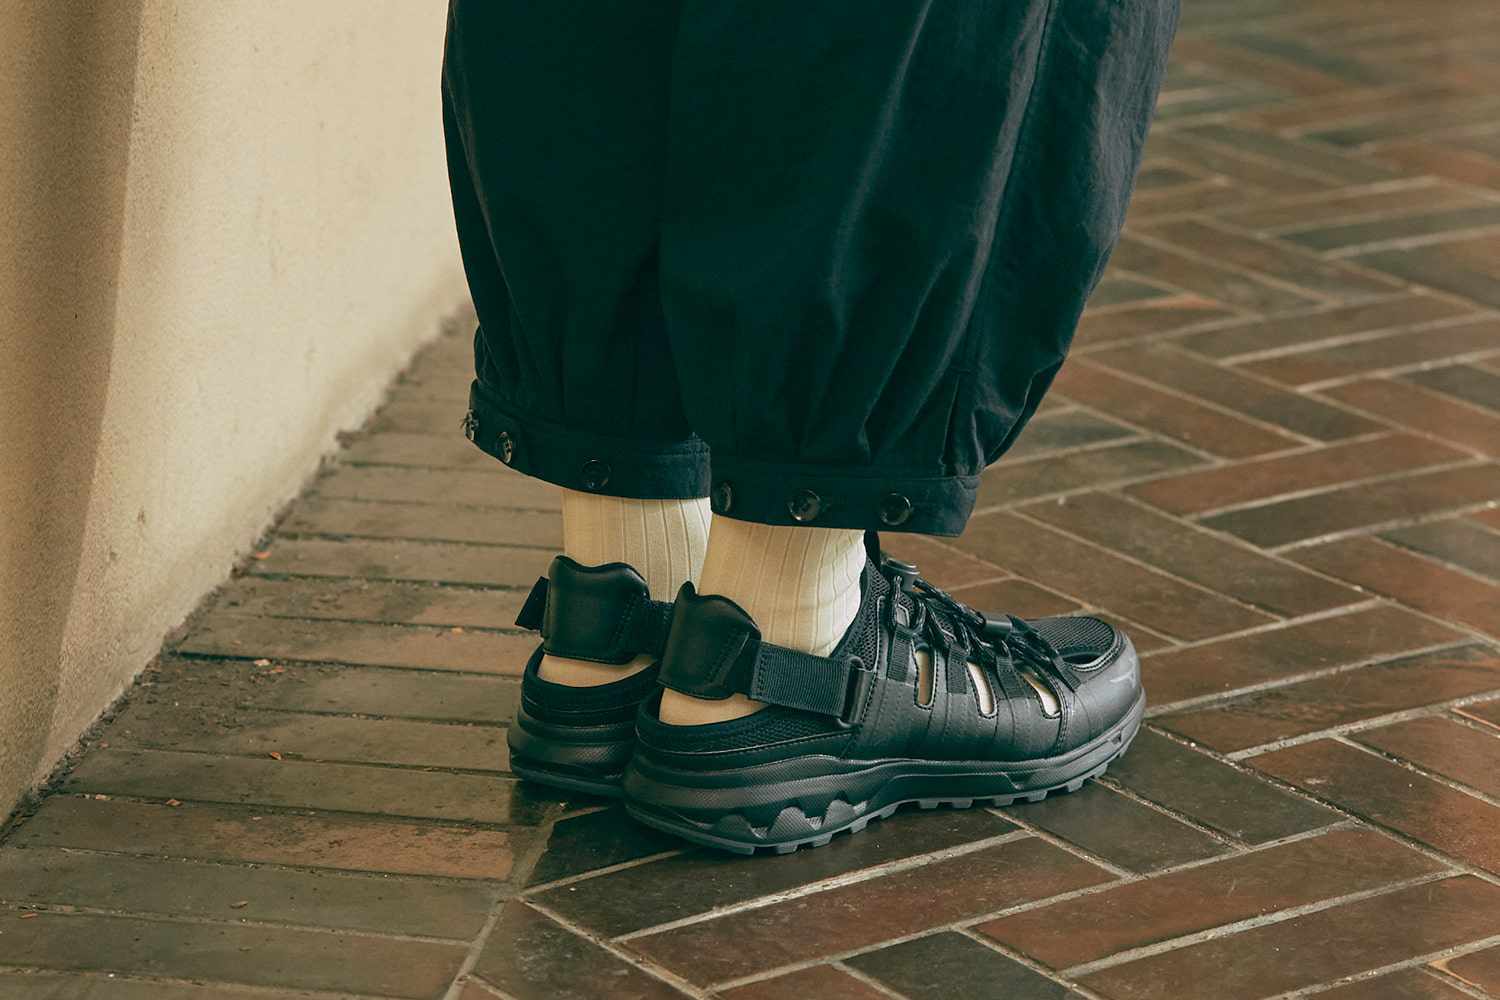 Mizuno's wave evok switch sneaker sandal in grey and black colorways